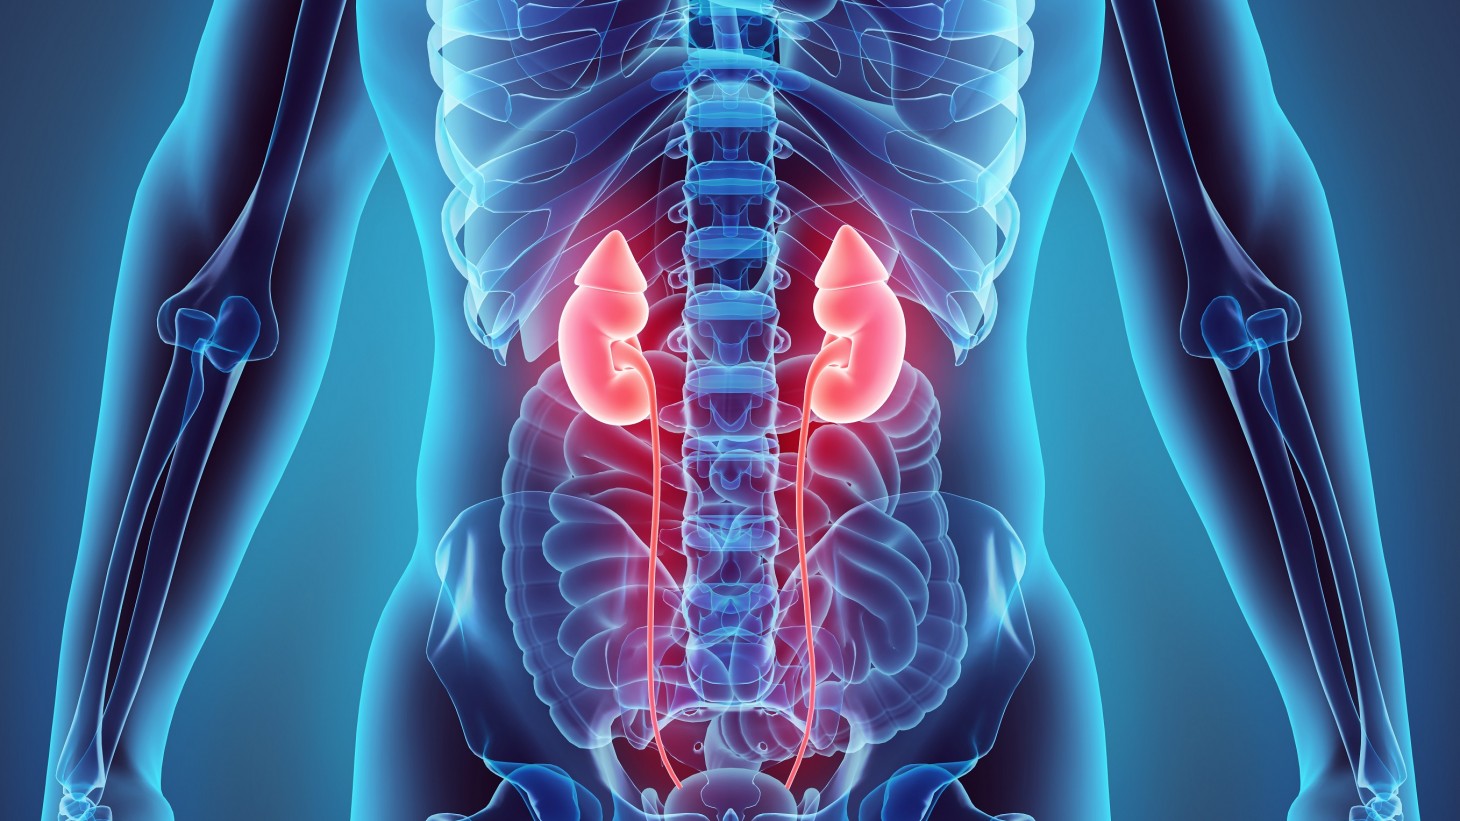 xray image of internal organs, including kidneys